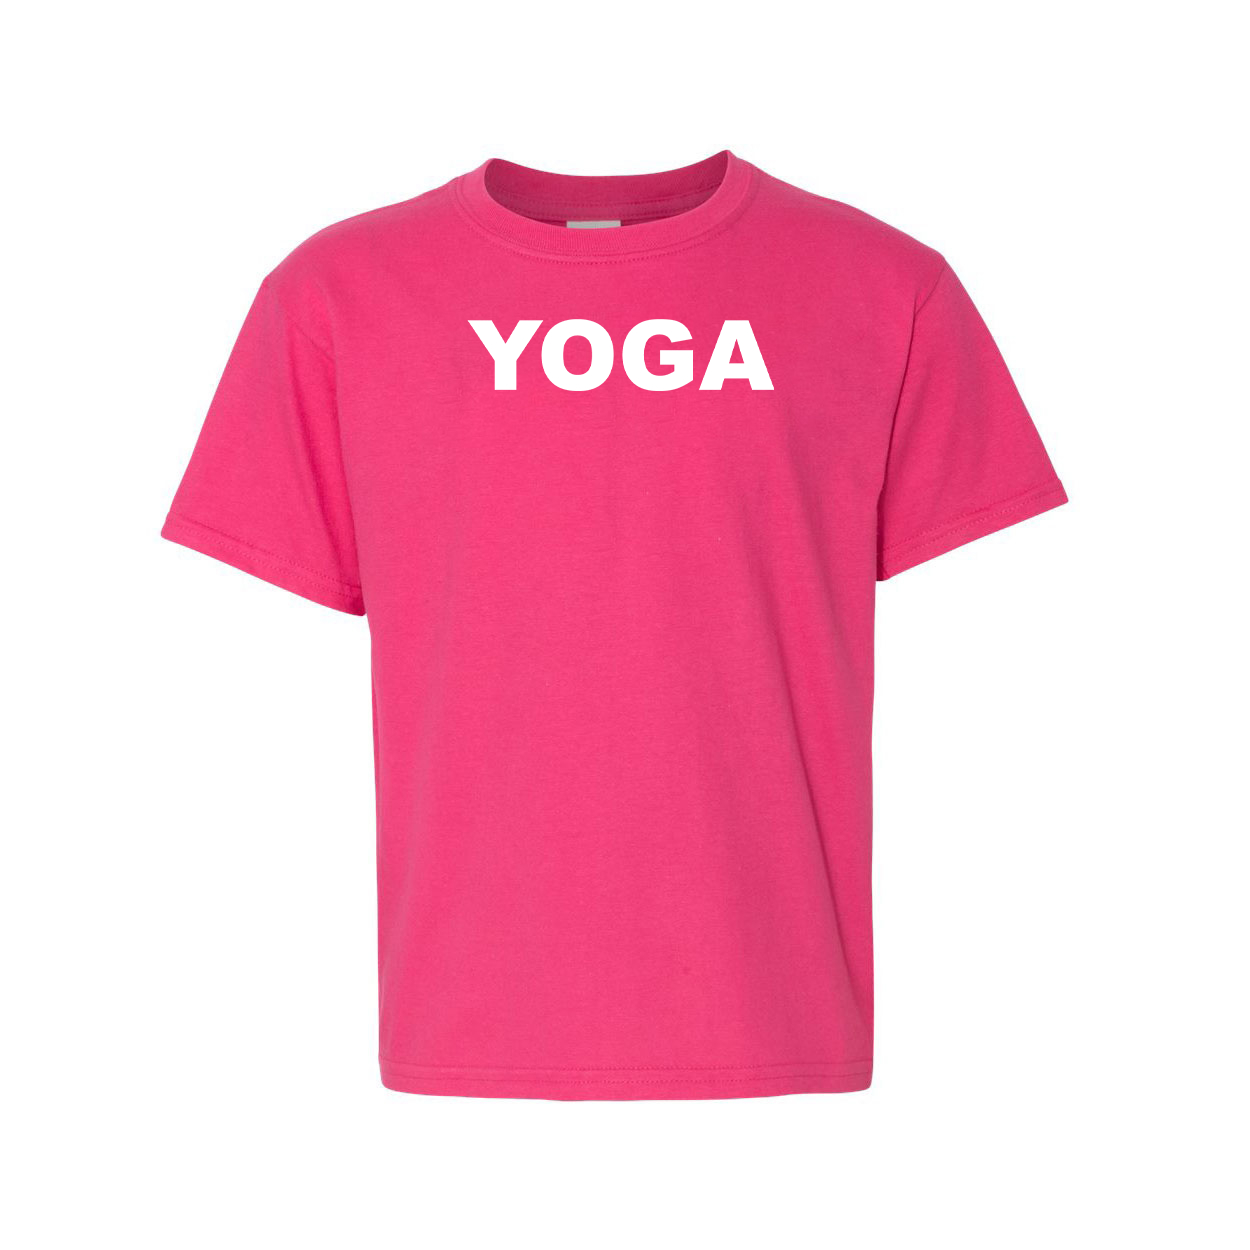 Yoga Brand Logo Classic Youth T-Shirt Pink 